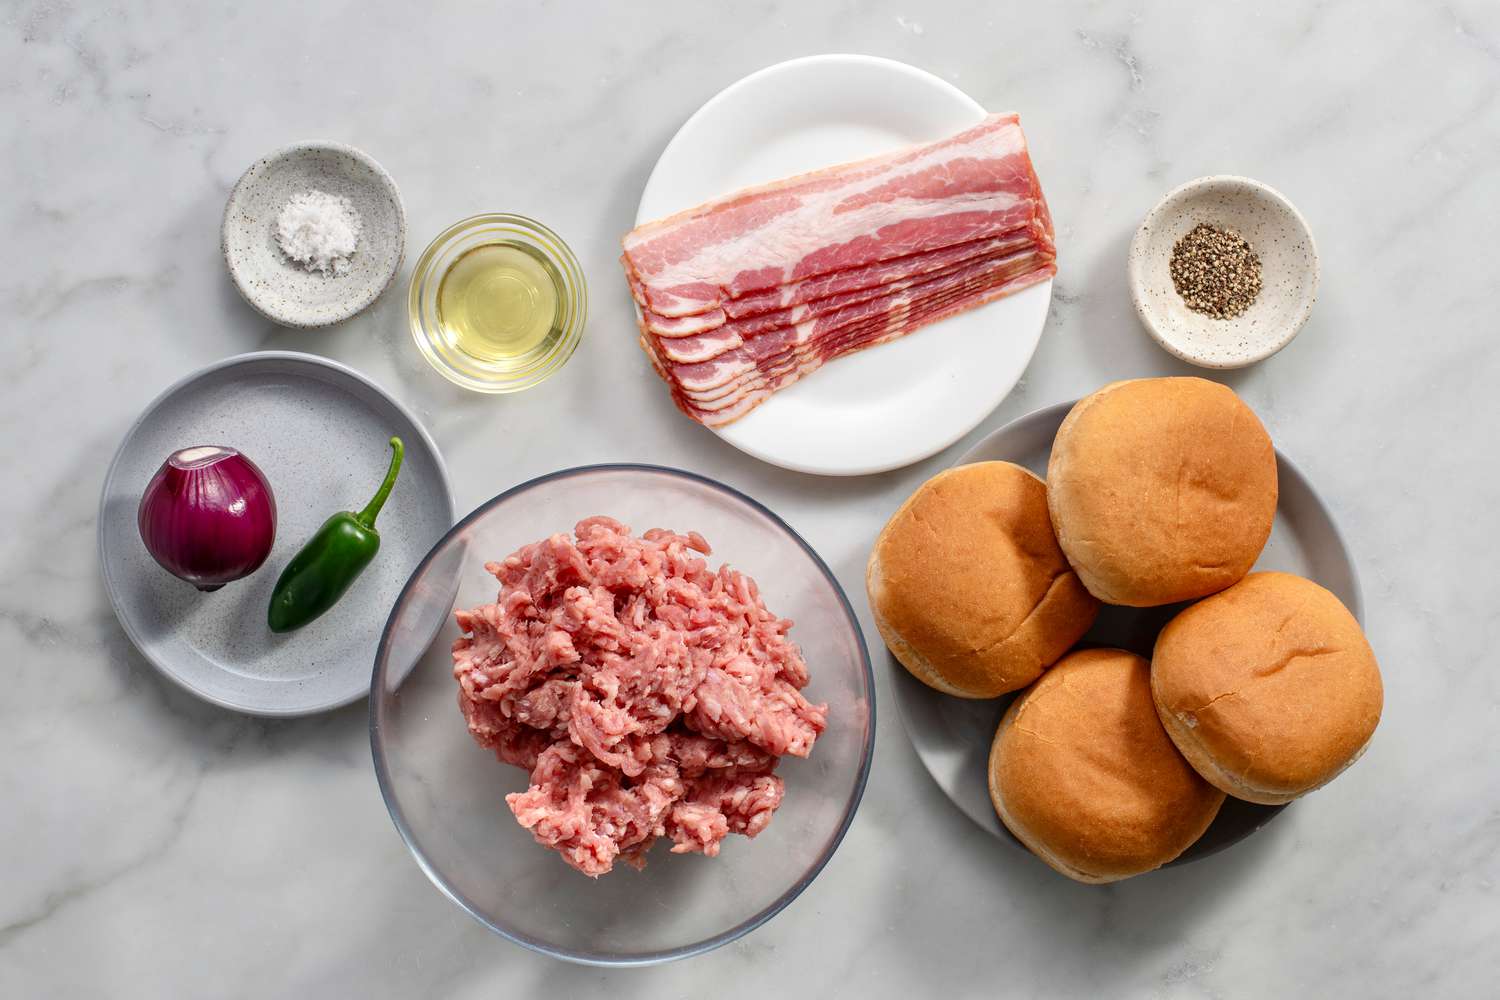 Ingredients to make bacon jalapeno smashburgers